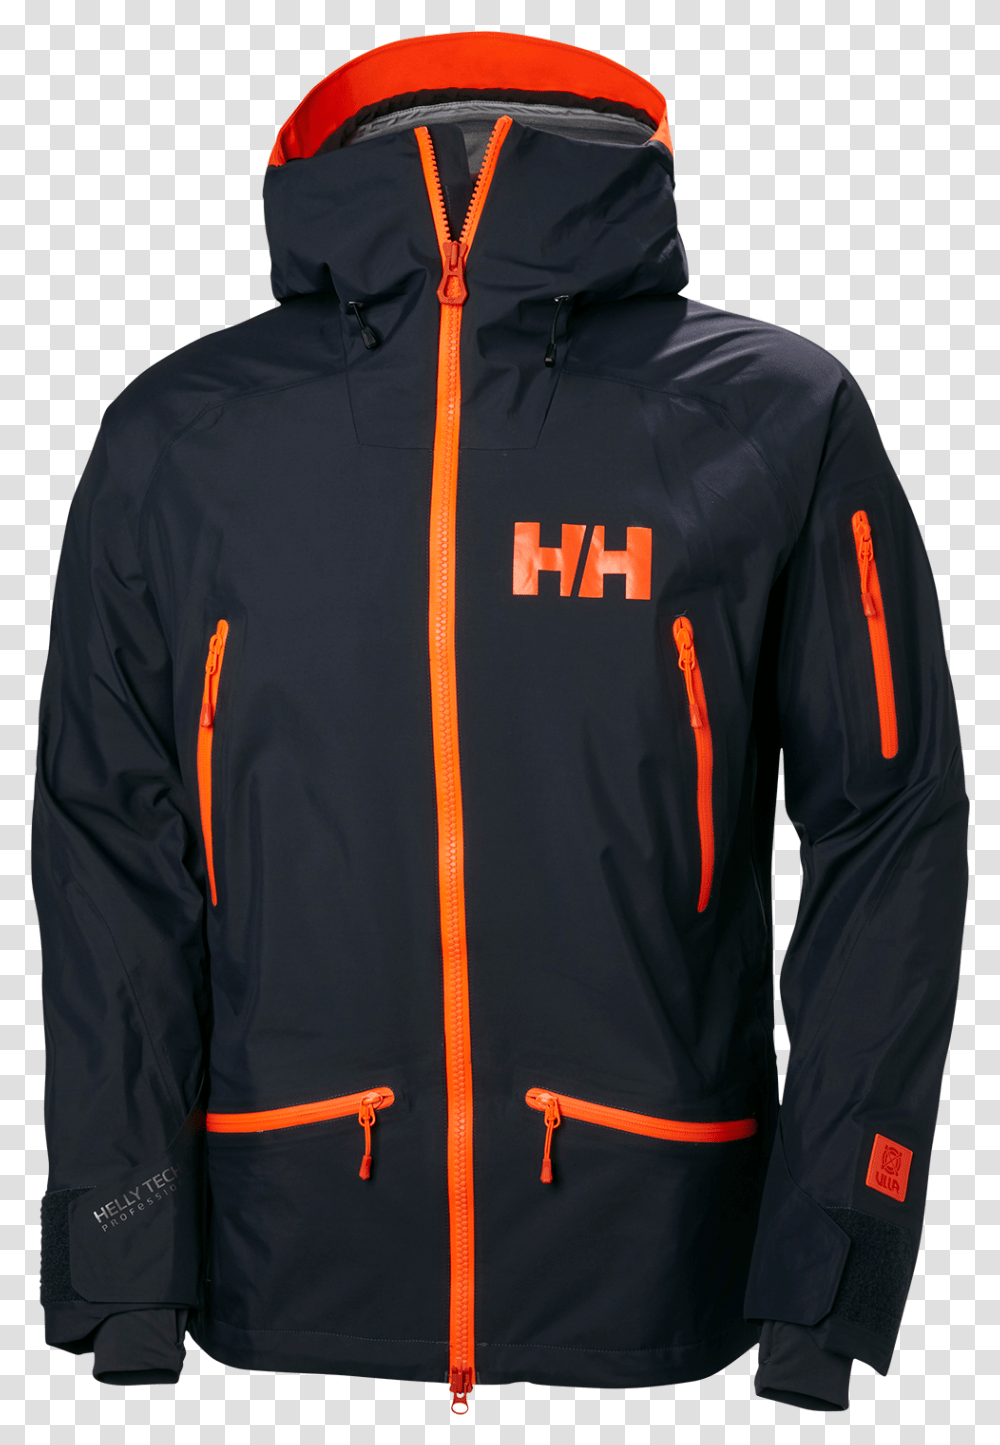 Jacket Clothes Free Background Images Helly Hansen Ridge Shell Jacket, Apparel, Coat, Raincoat Transparent Png